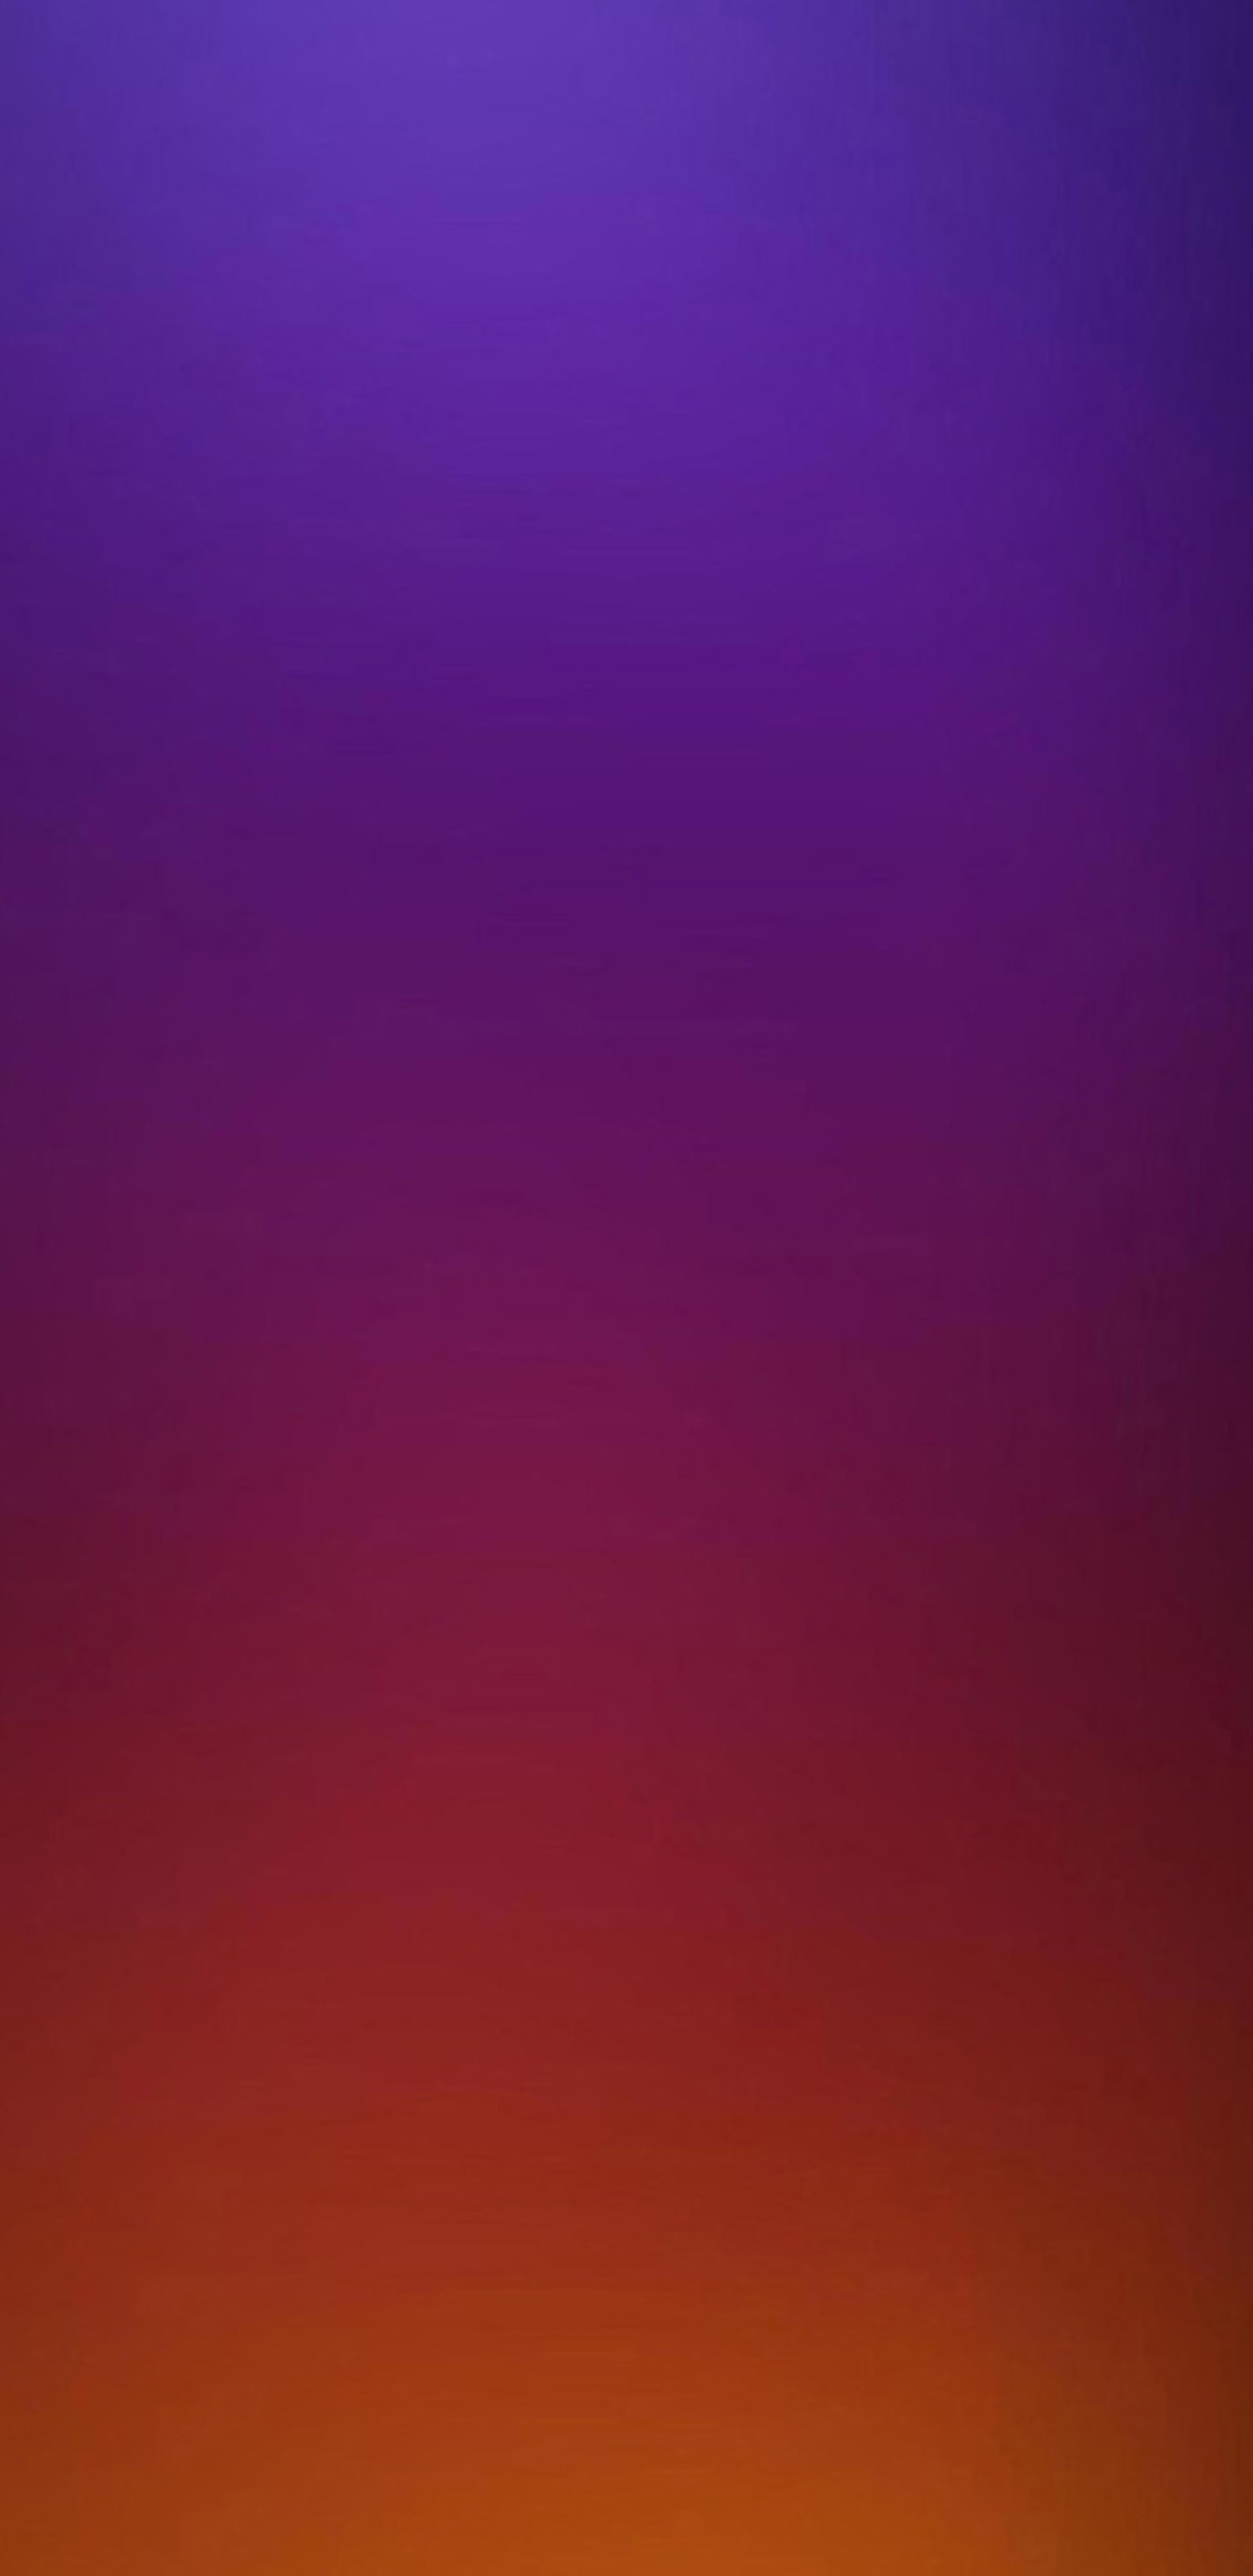 samsung galaxy s8 fondo de pantalla,cielo,violeta,púrpura,azul,rojo